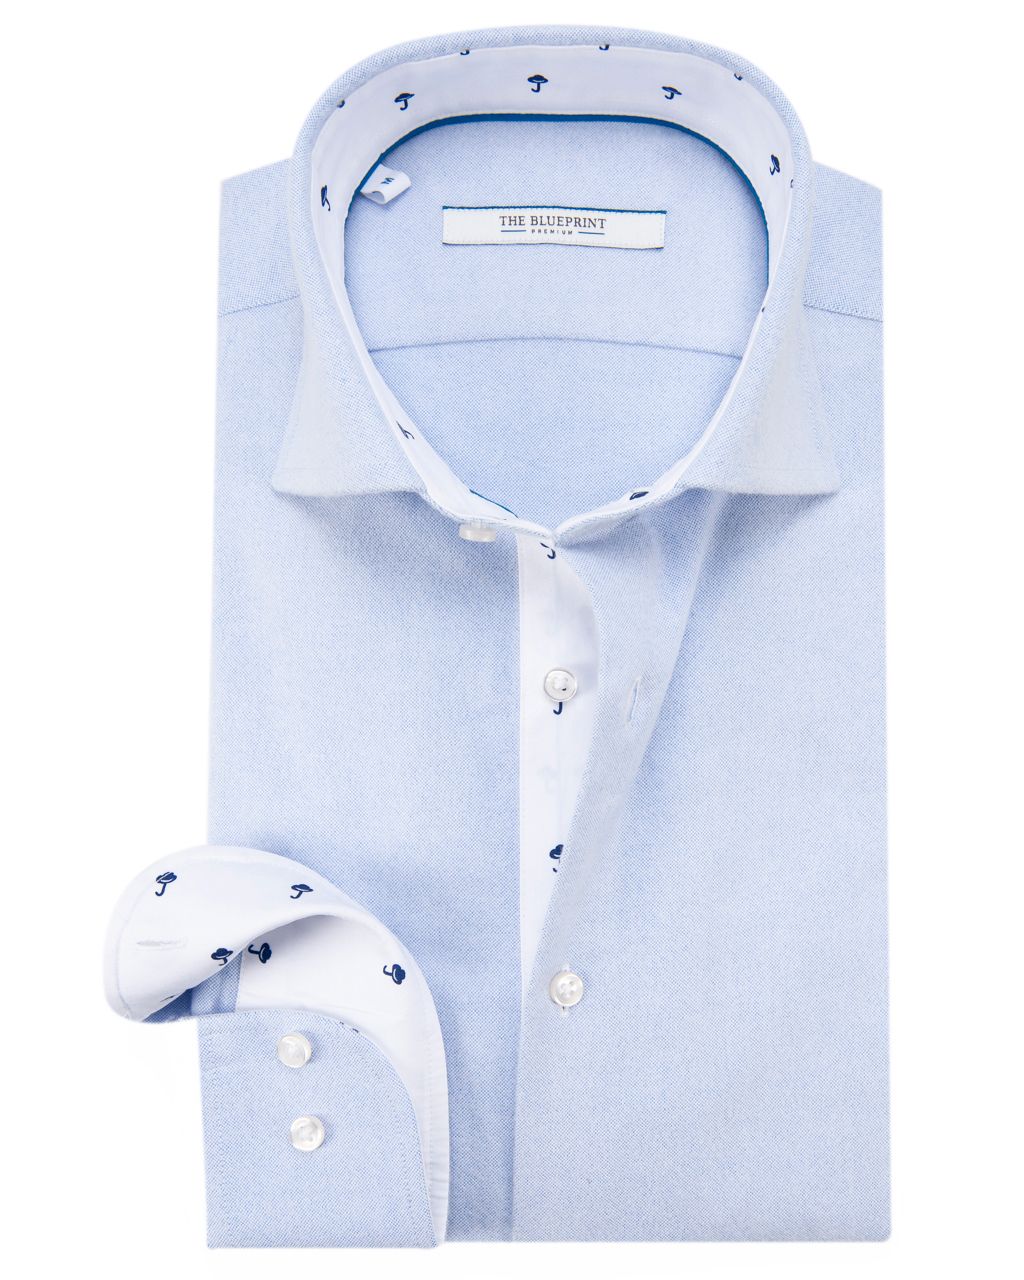 The BLUEPRINT Premium Trendy overhemd LM Lichtblauw uni 050600-001-L